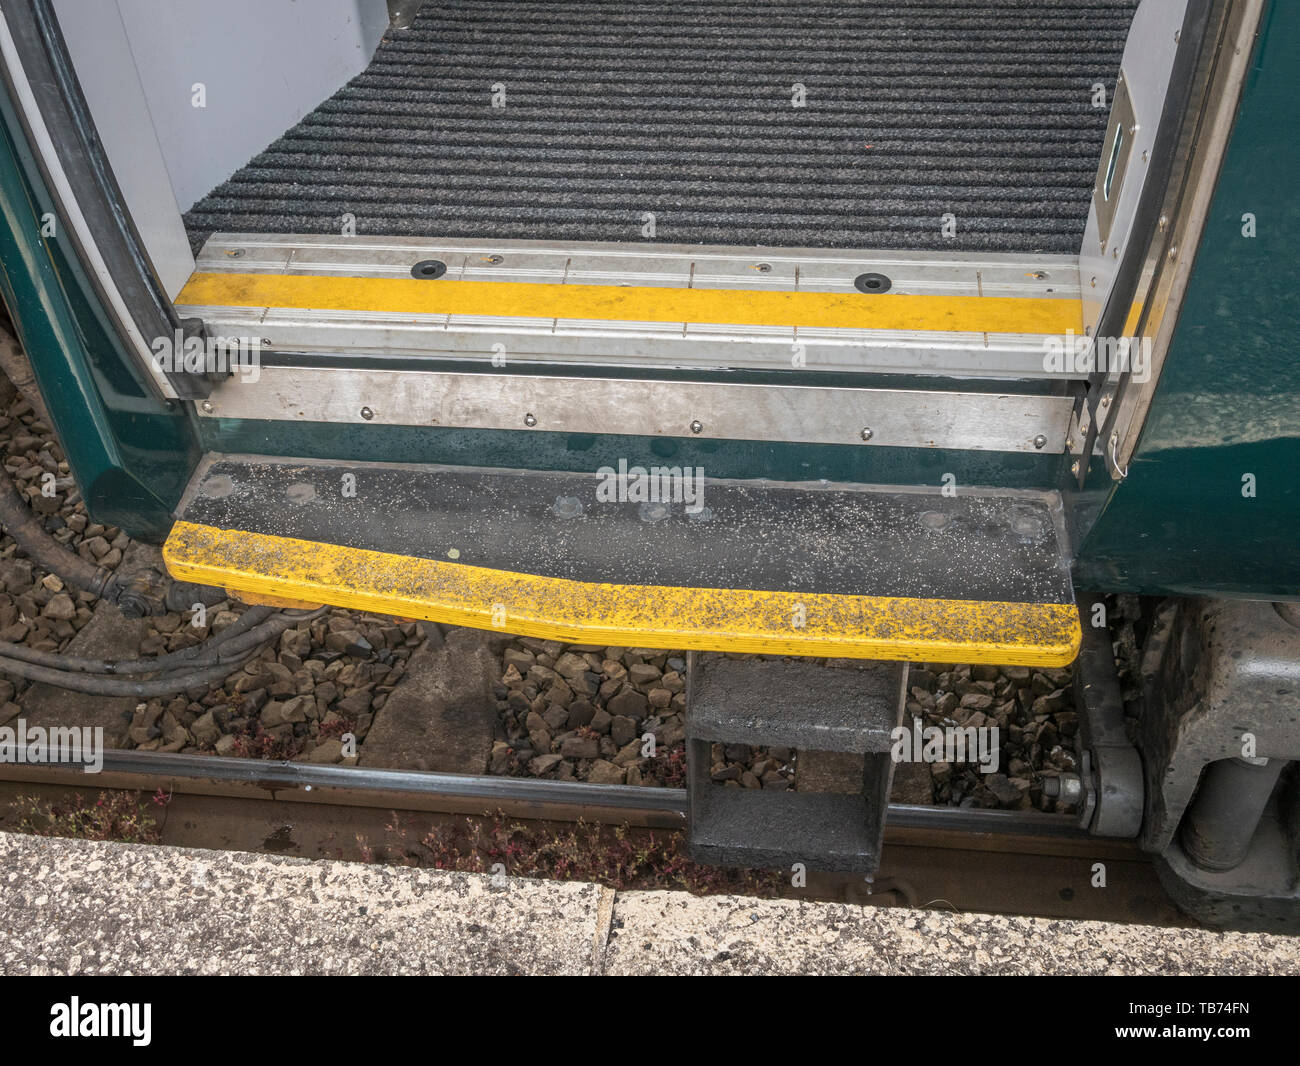 Gap between railway platform edge & GWS railway carriage step painted yellow. Metaphor Mind the Gap, watch your step, gender gap, wage gap, warning. Stock Photo